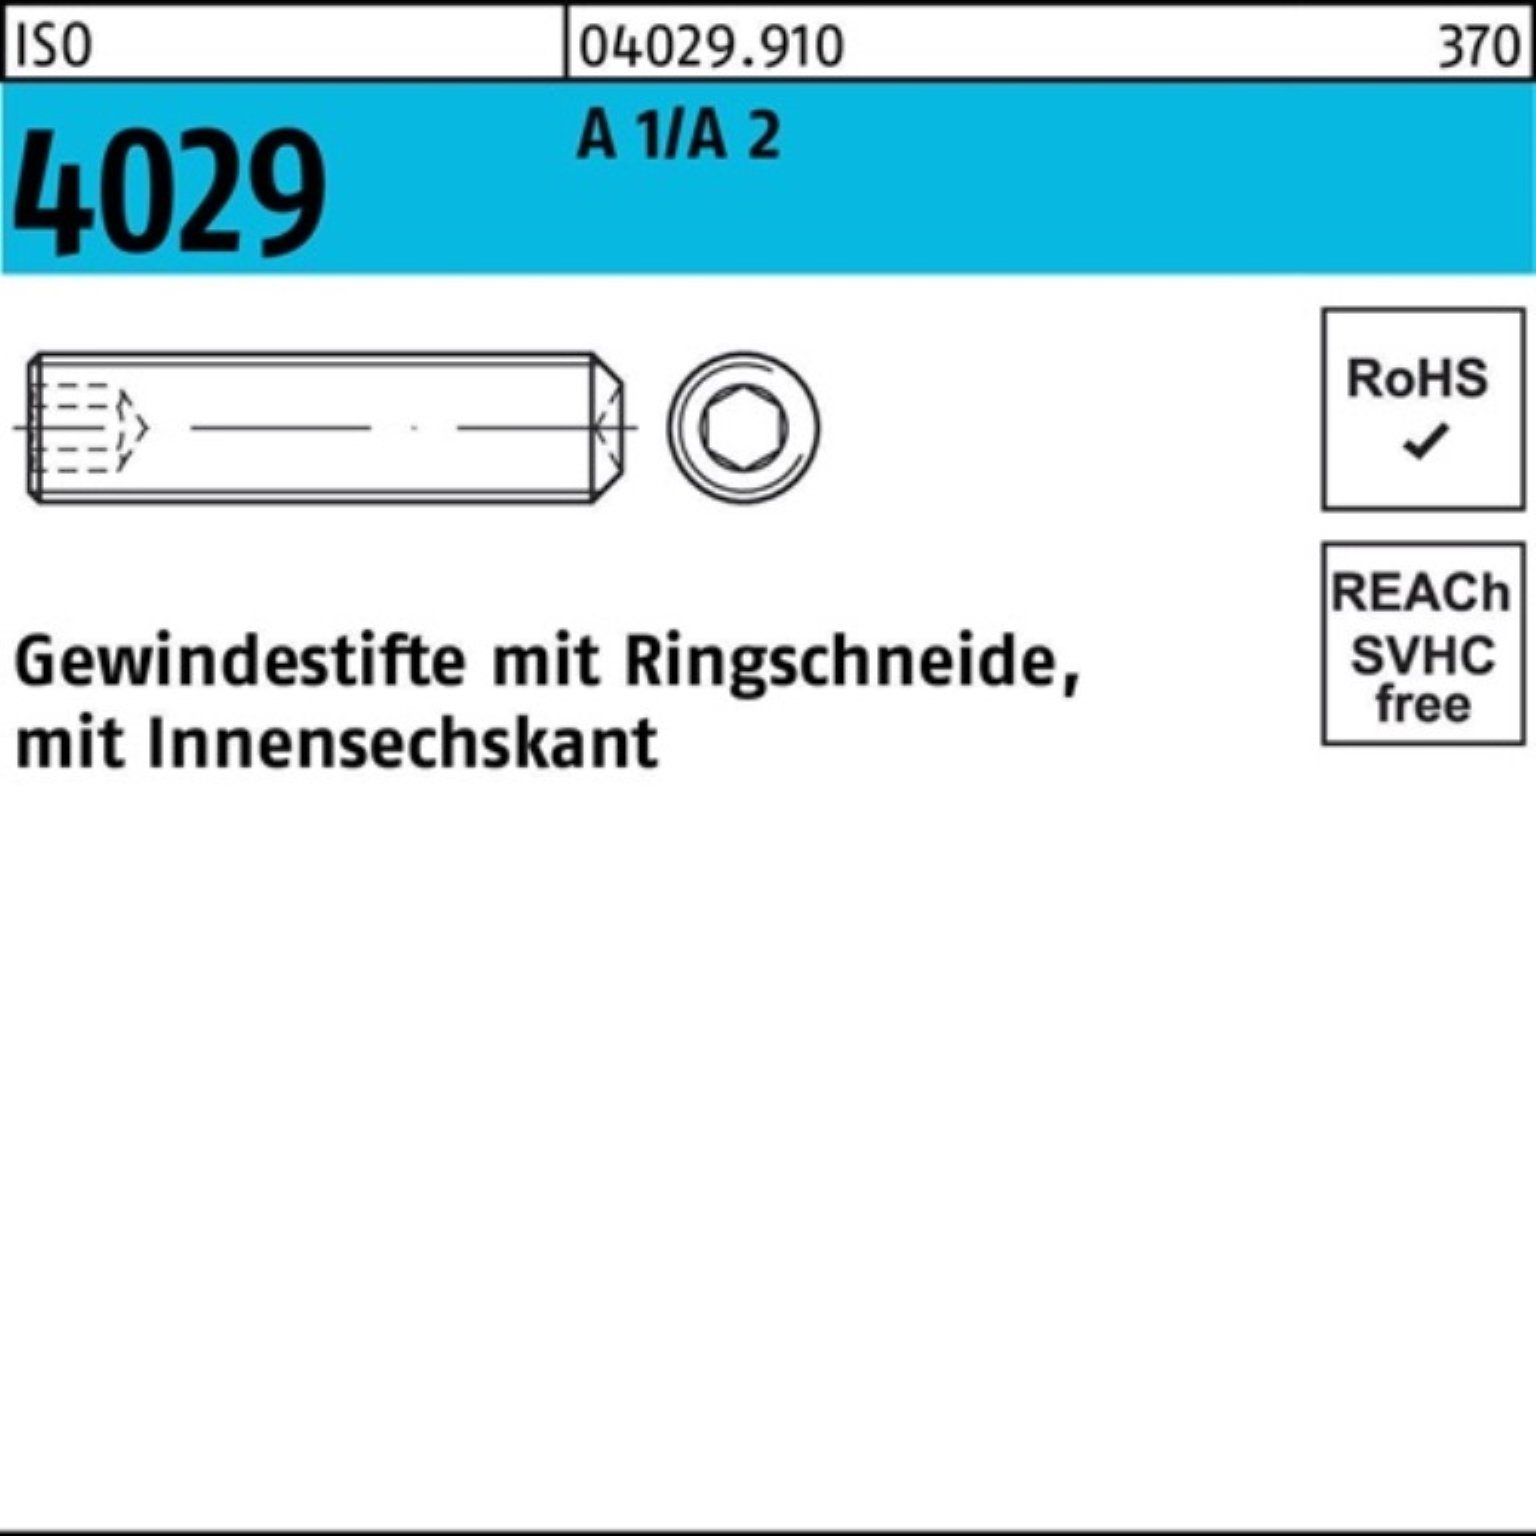 Ringschneide/Innen-6kt Gewindebolzen A 4029 Reyher Gewindestift 2 Pack 500 500er ISO M5x 10